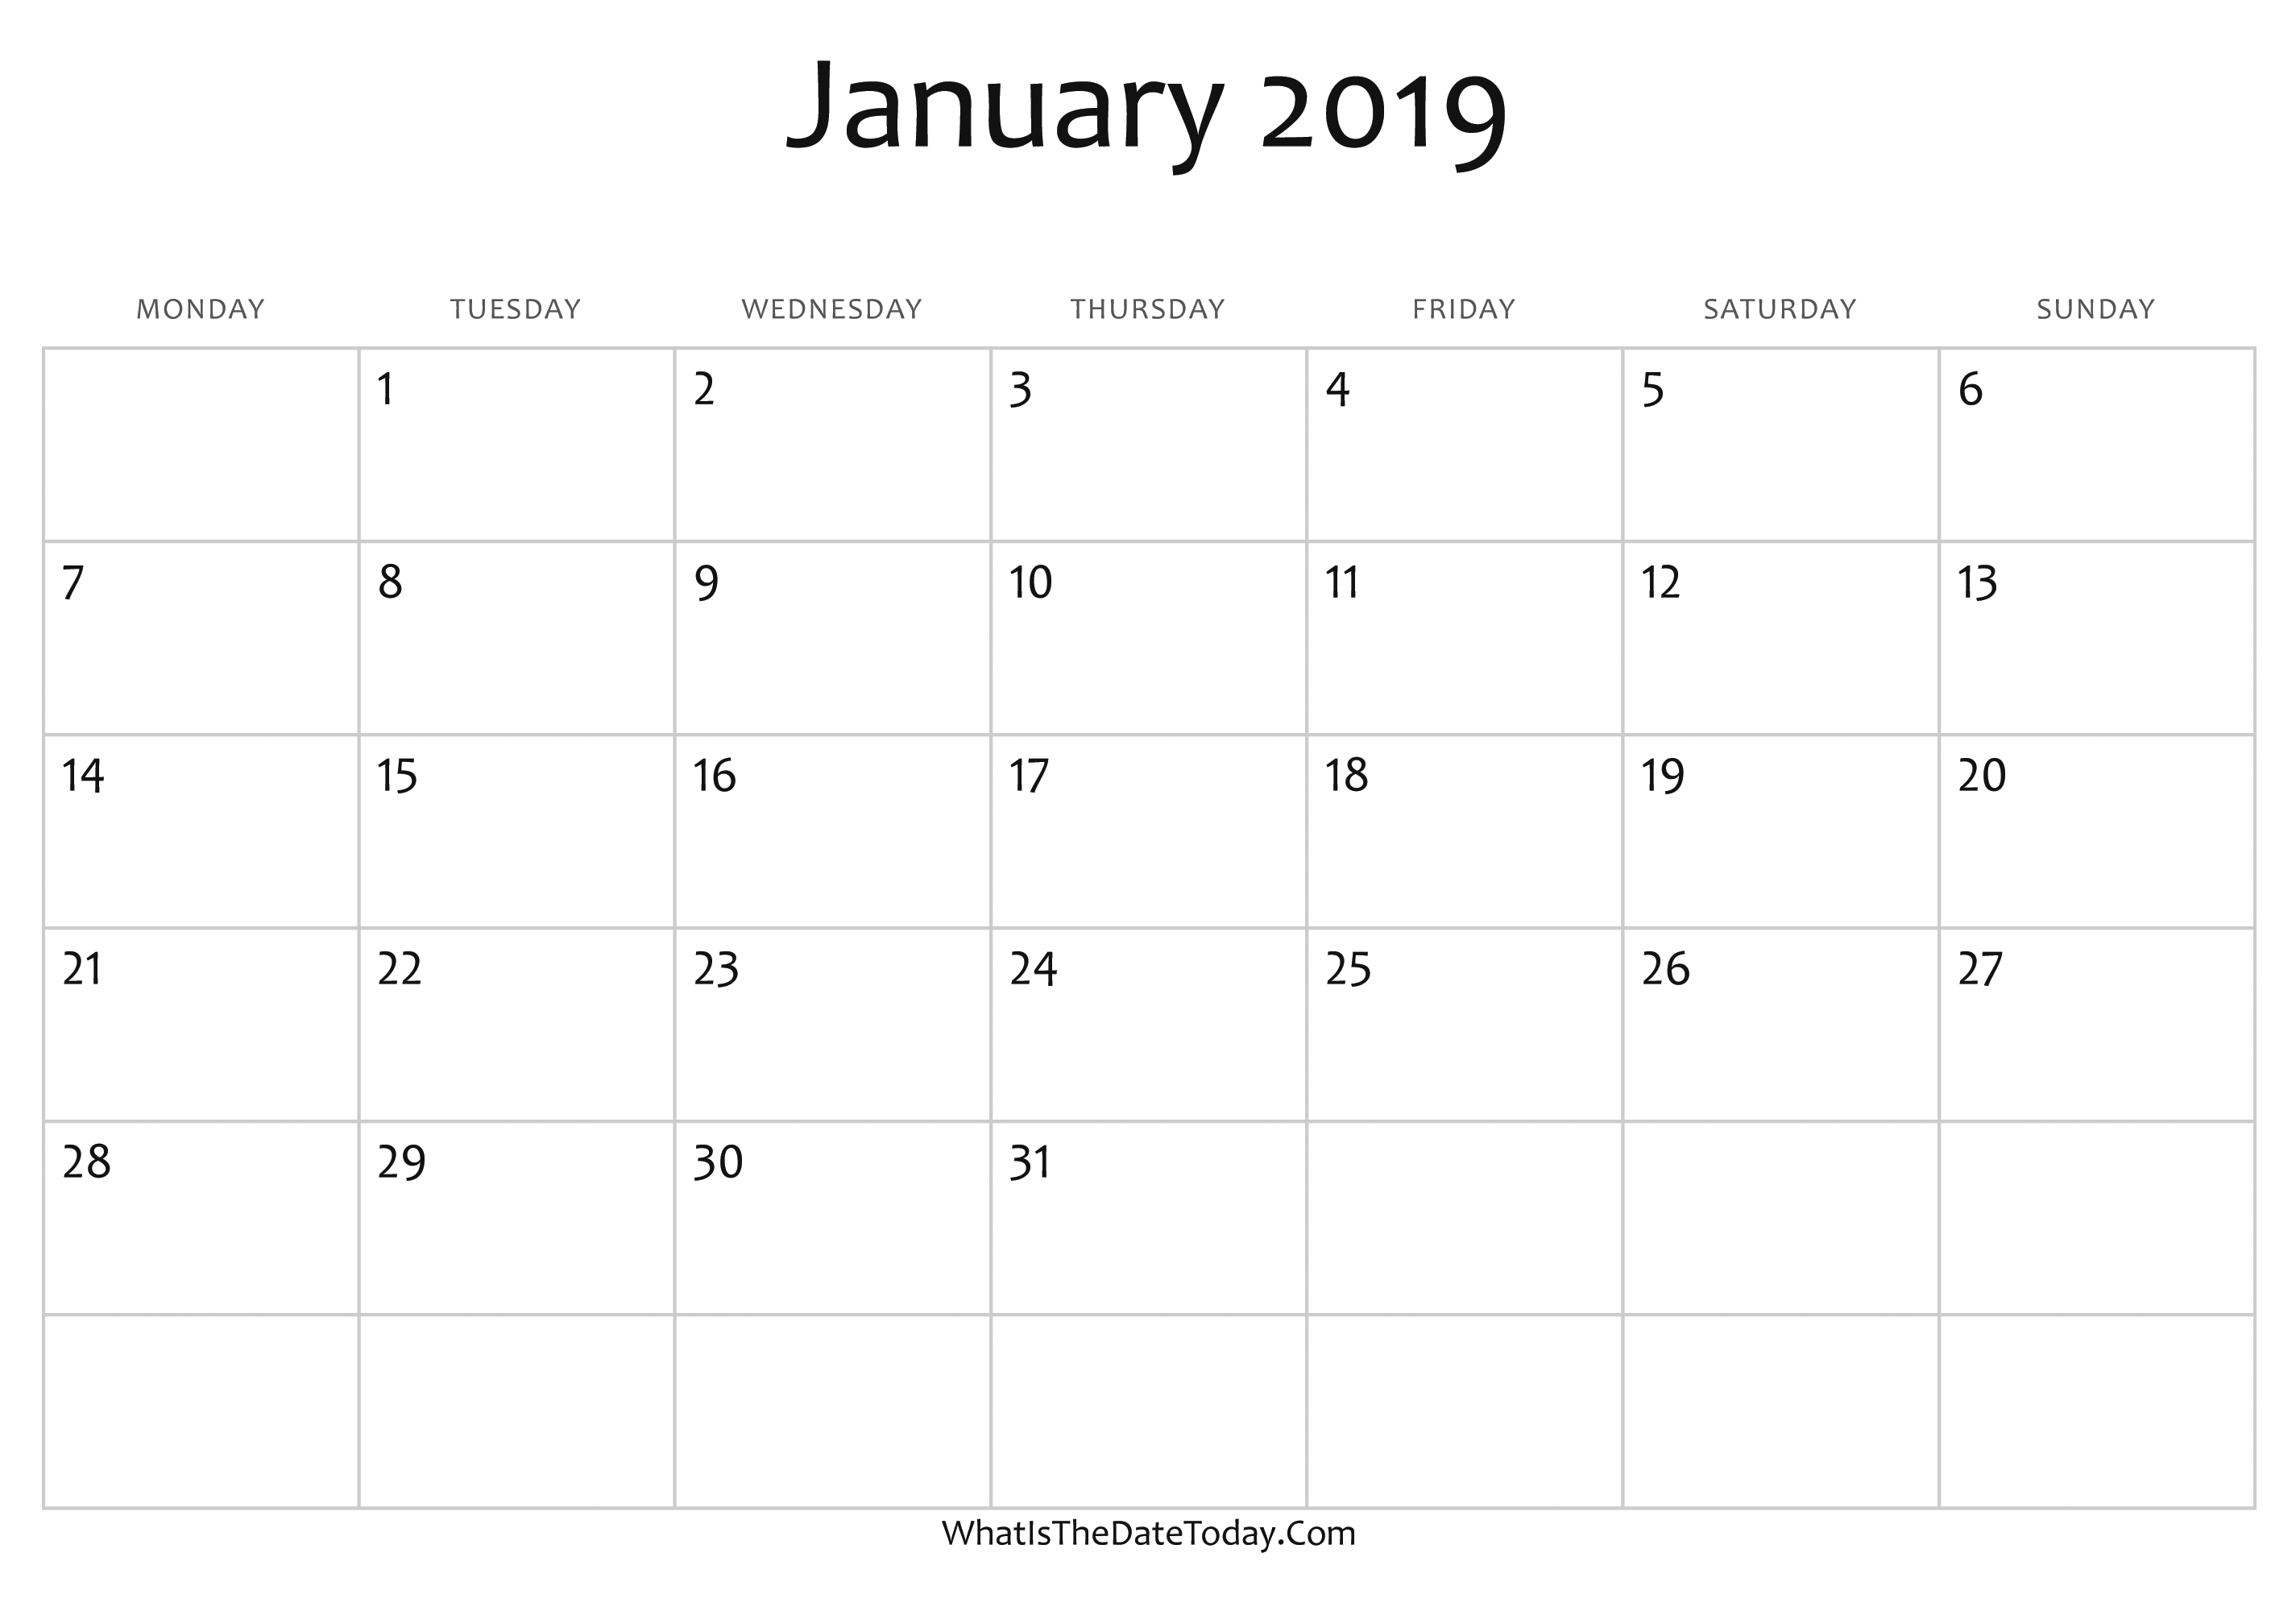 blank-january-calendar-2019-editable-whatisthedatetoday-com